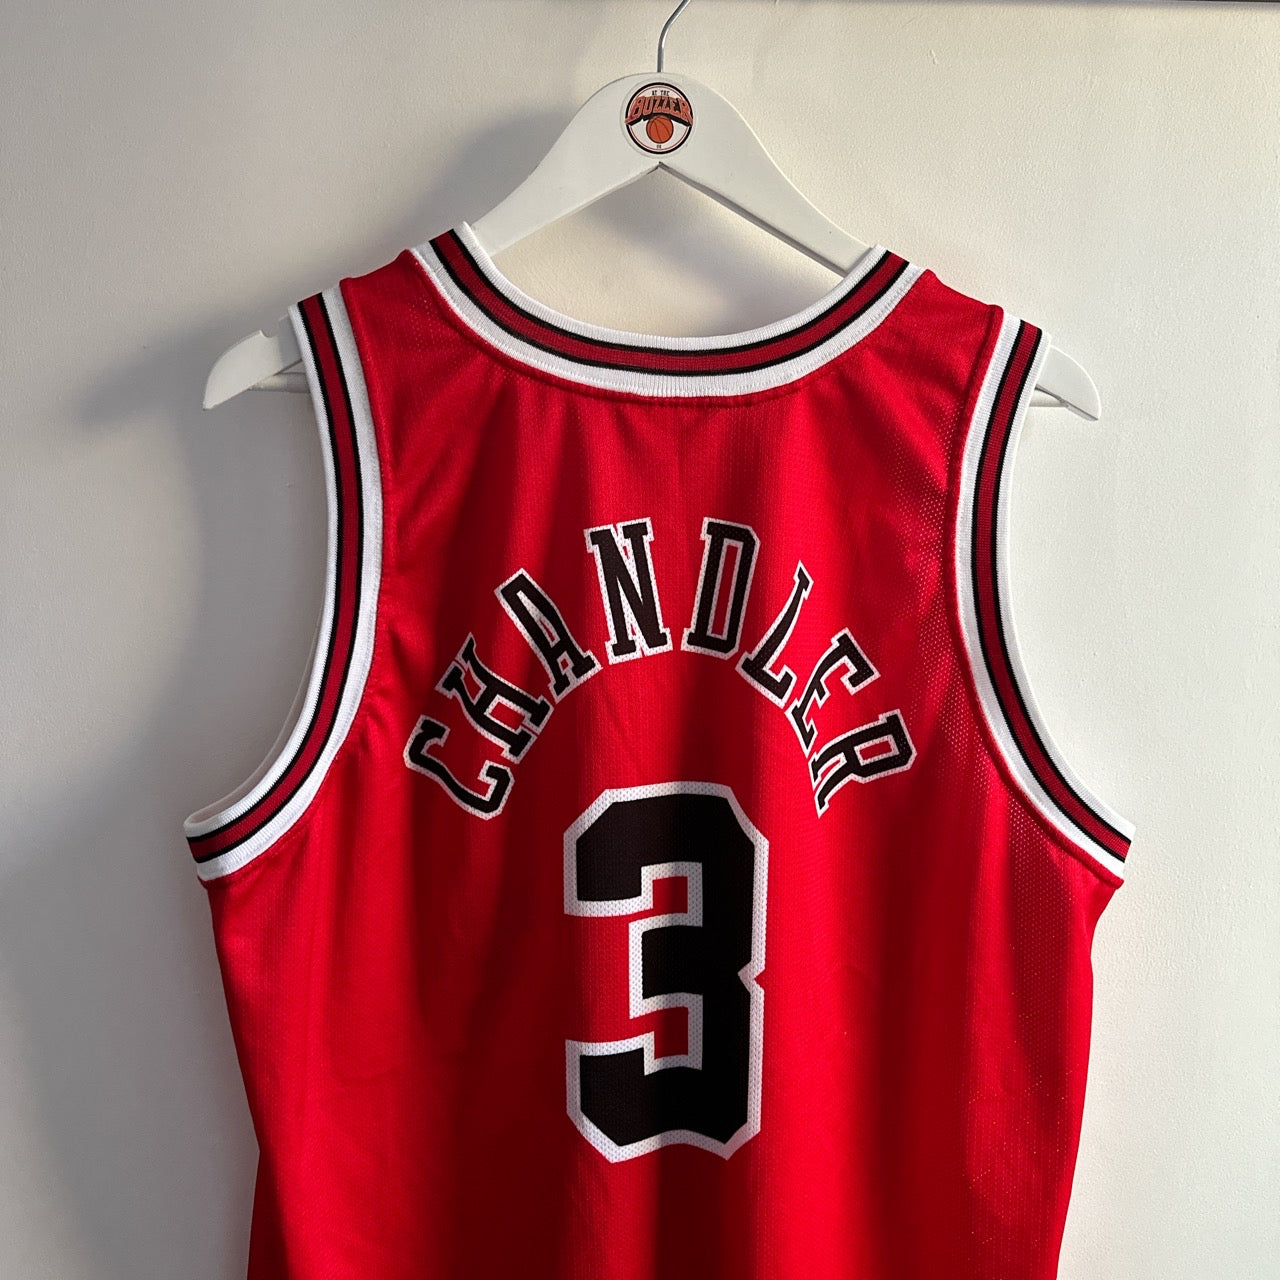 Chicago Bulls Tyson Chandler Champion jersey - XL